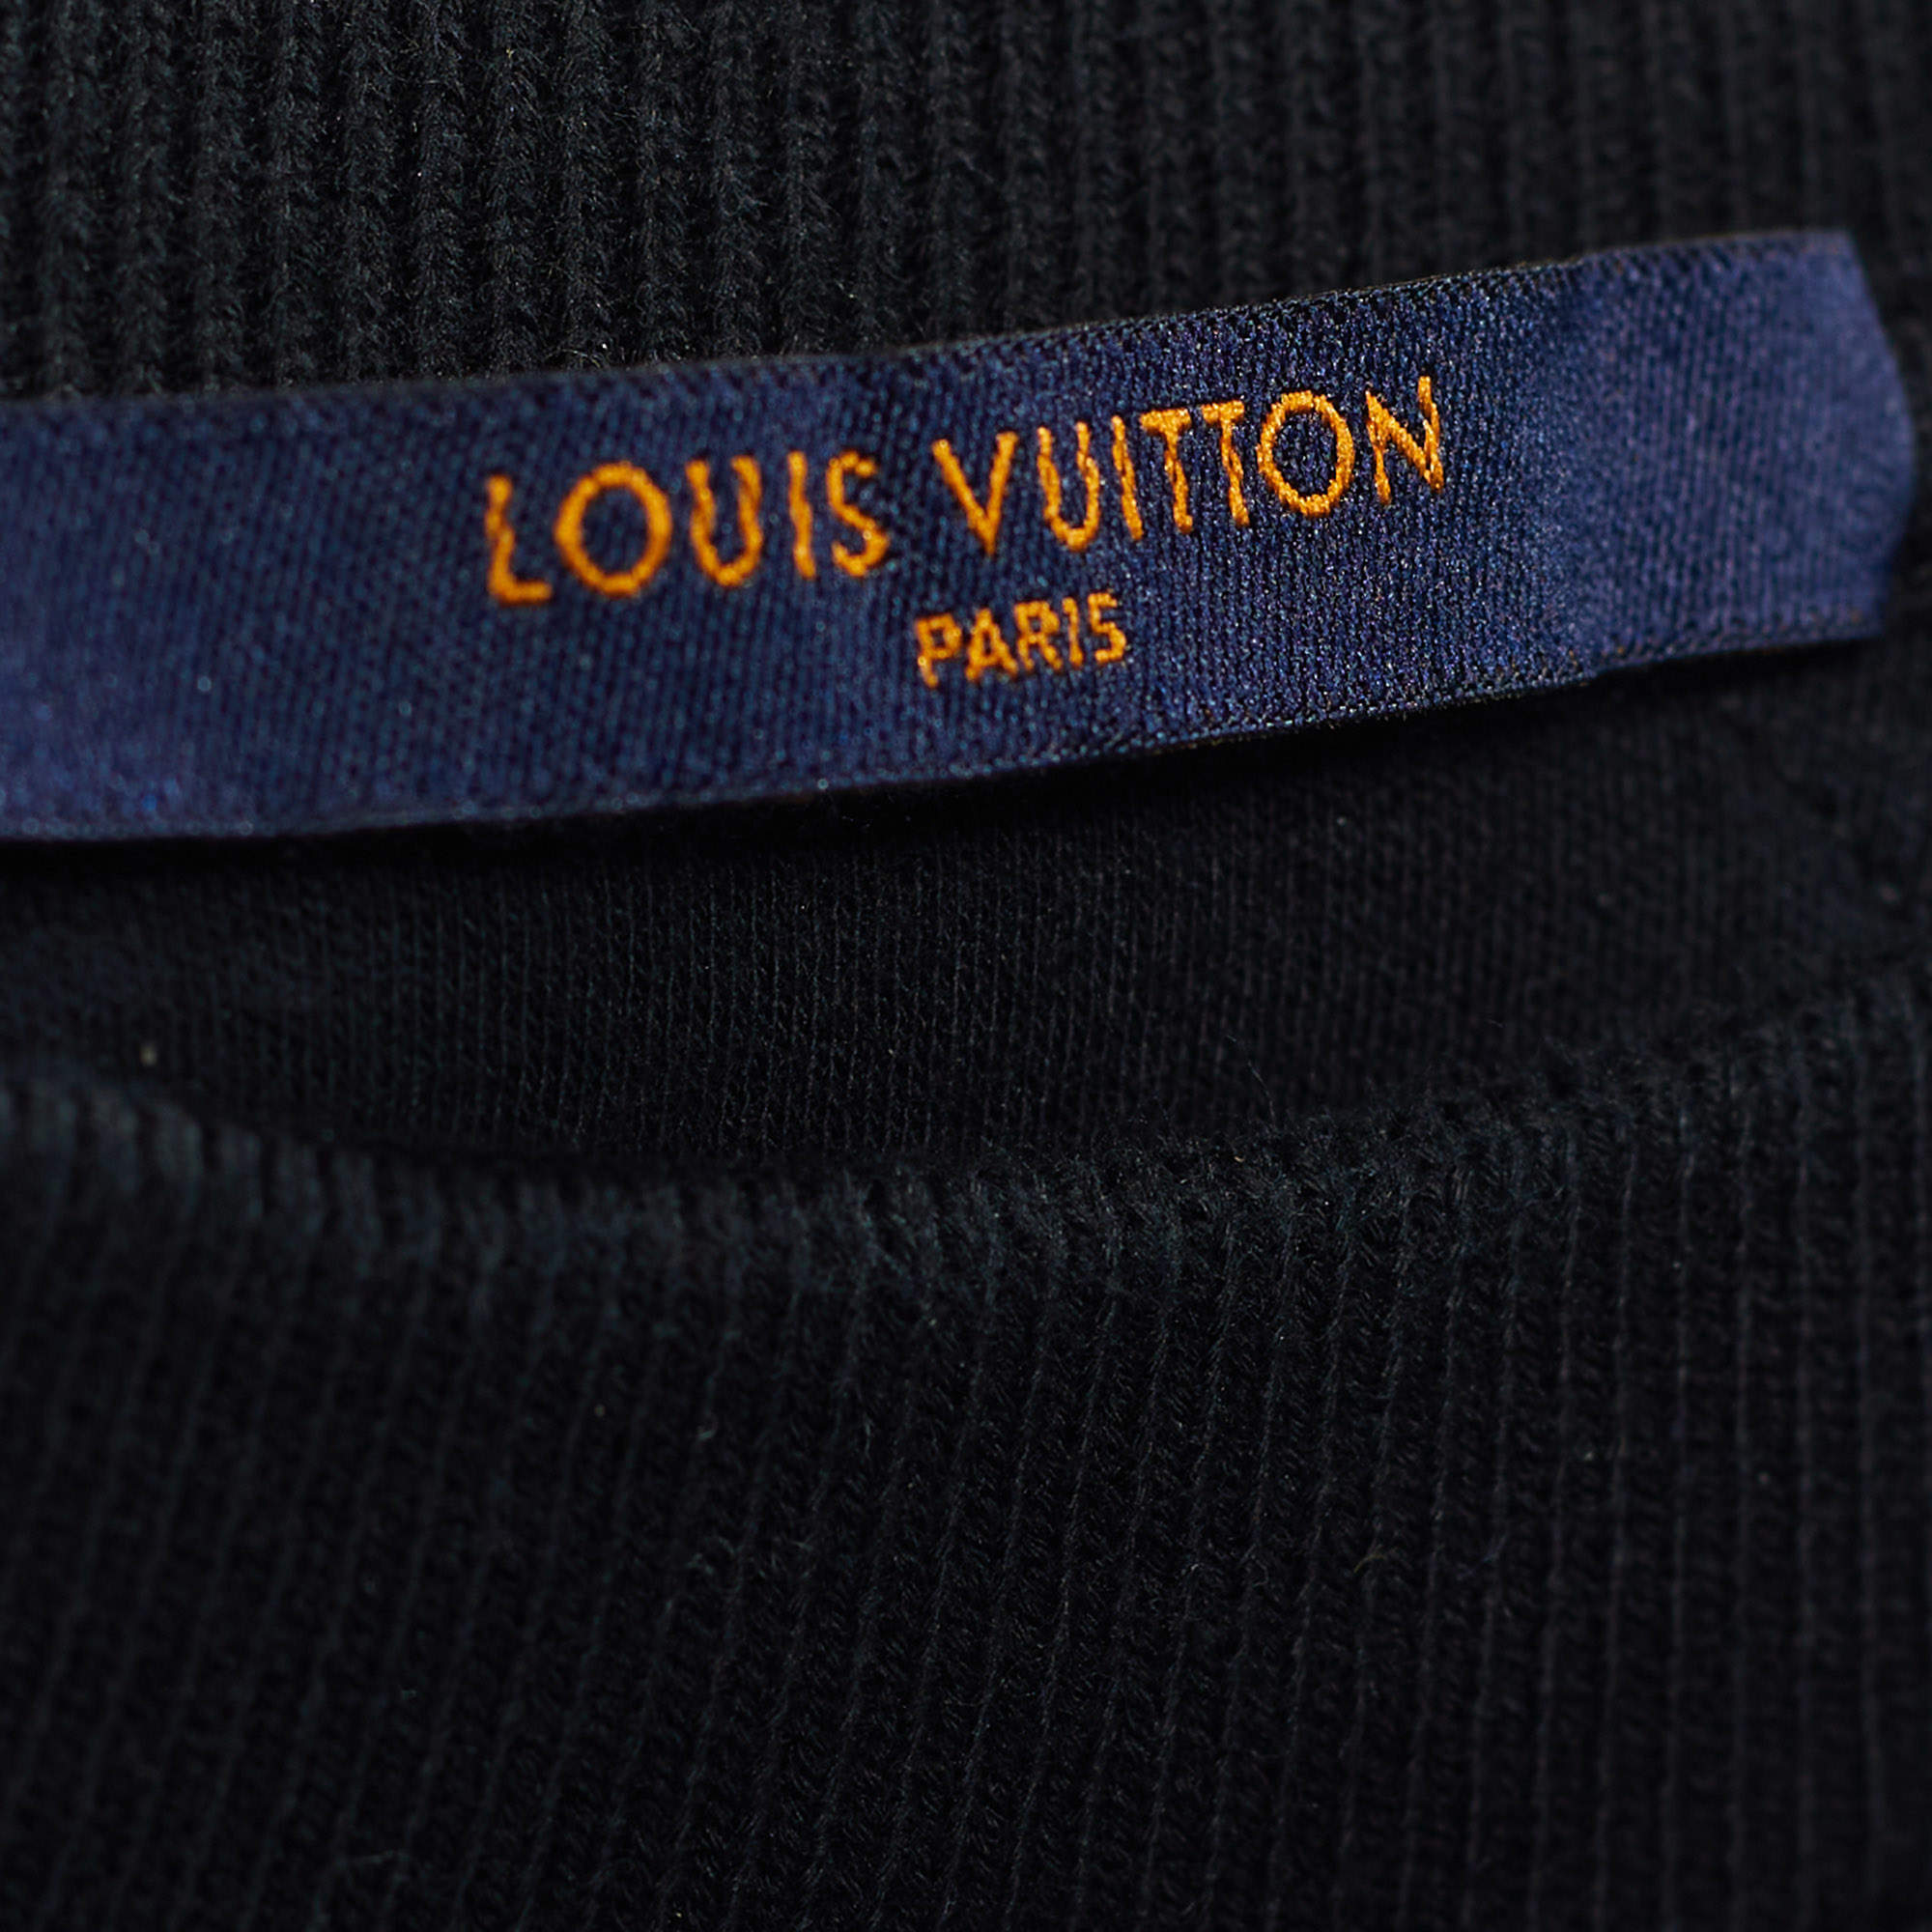 Louis Vuitton Black Knit Malletier Paris 1854 Print Raglan Sleeve Jumper XL  Louis Vuitton